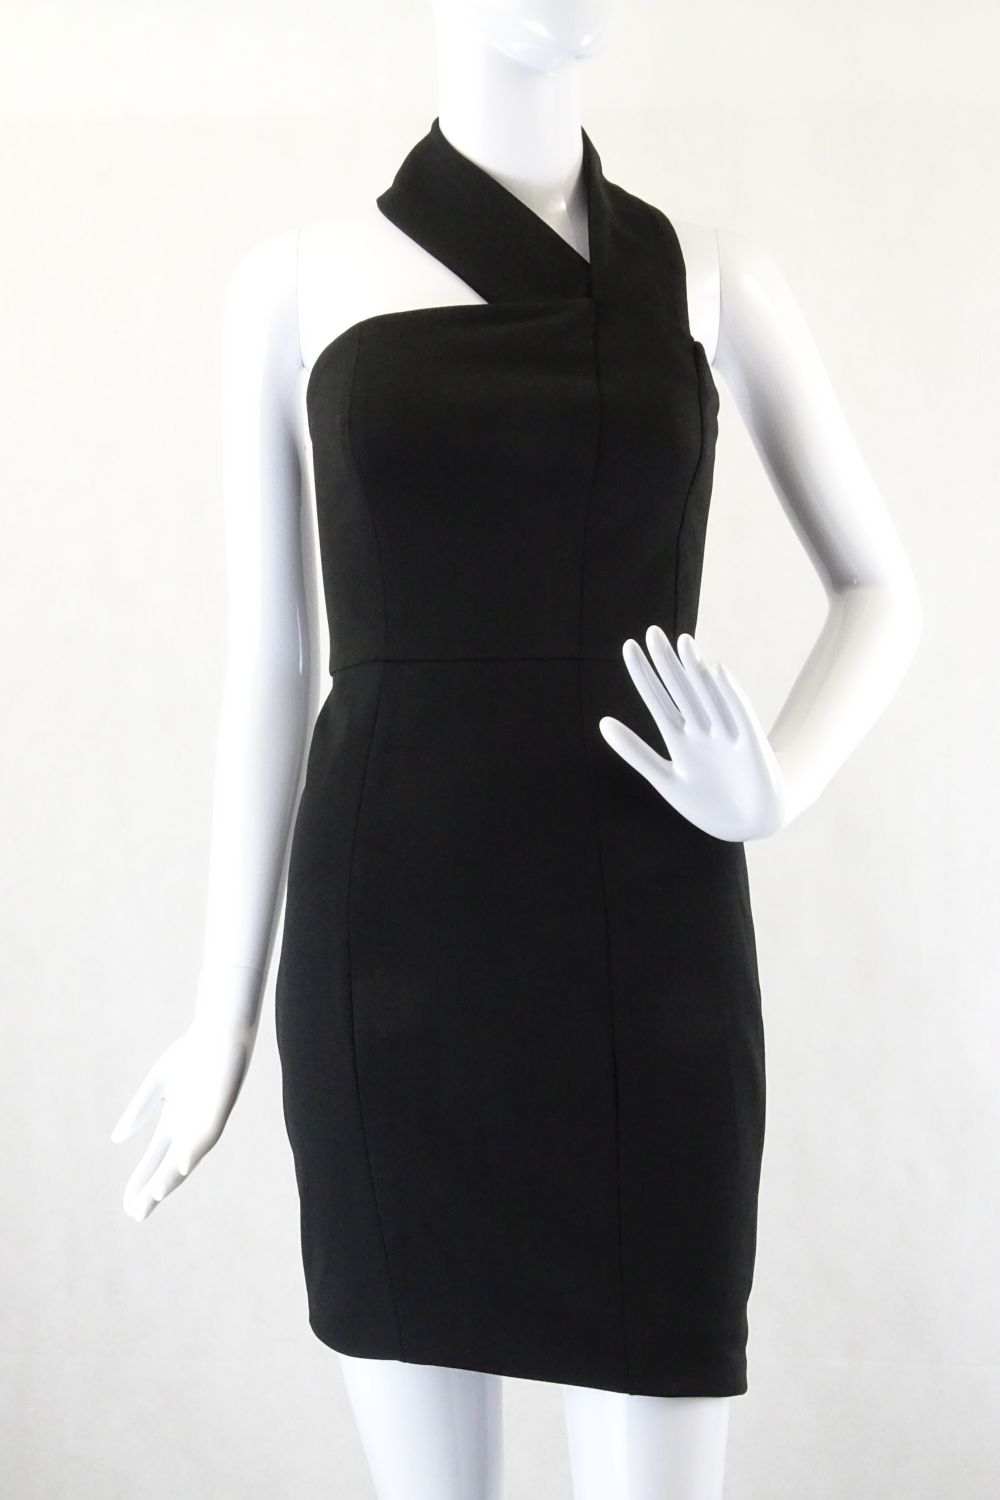 Misha Collection Black Dress S